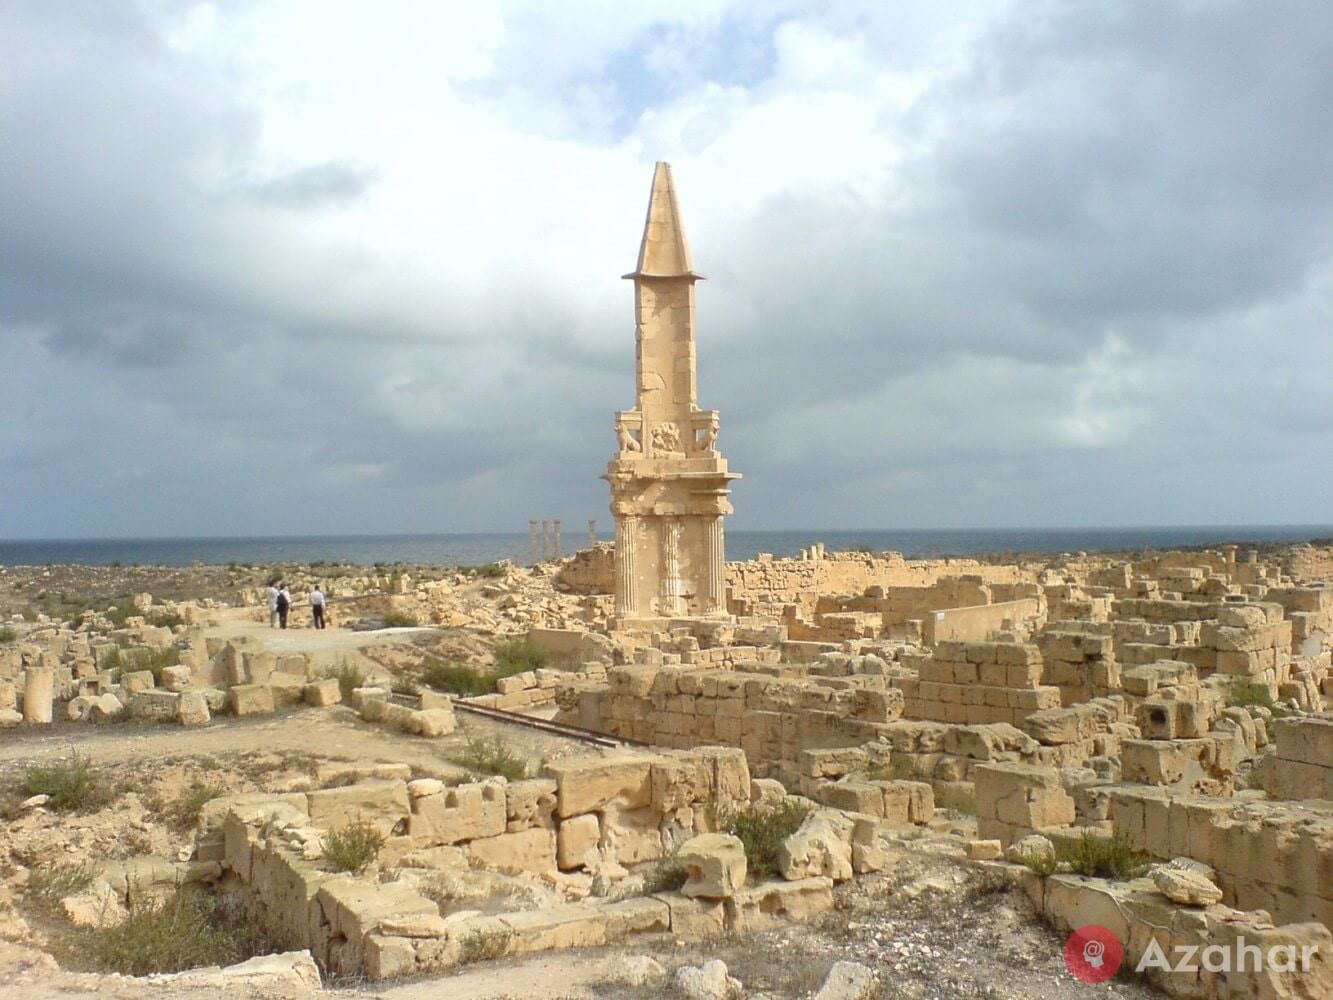 Sabratha, Libya